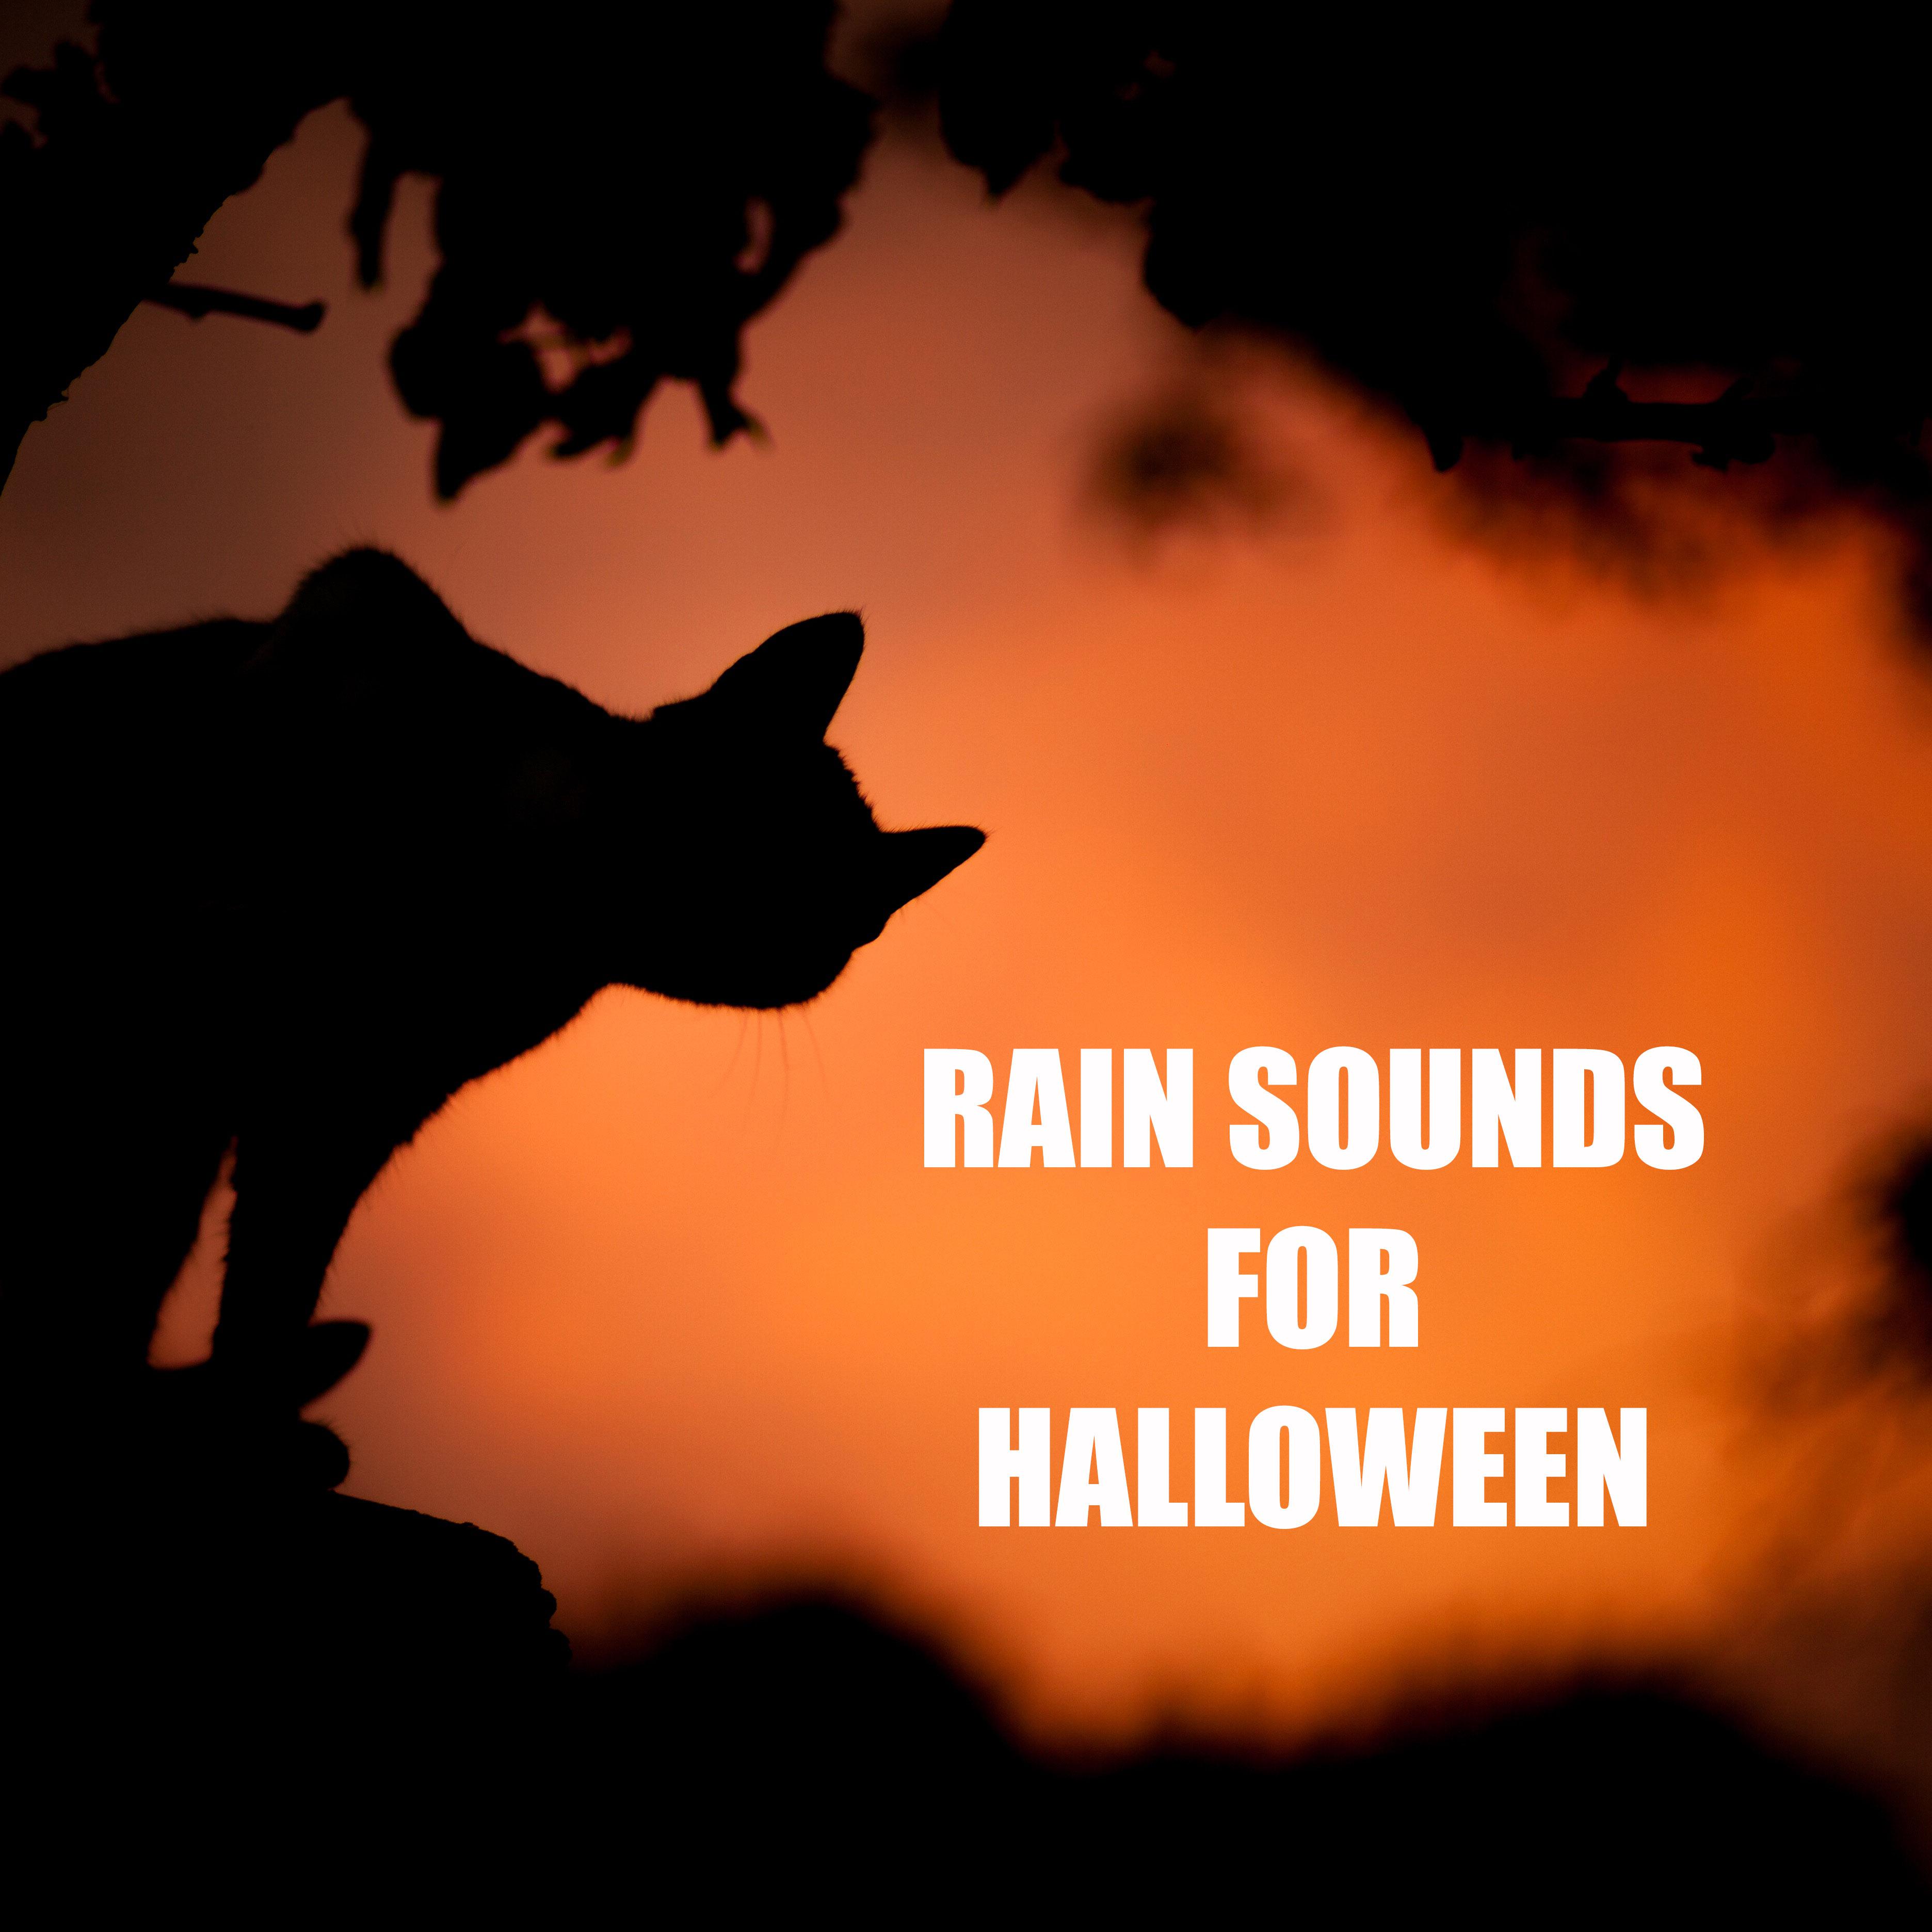 10 Halloween Rain Sounds - Spooky Rain Sounds for Halloween. Halloween Sound Effects - Rain